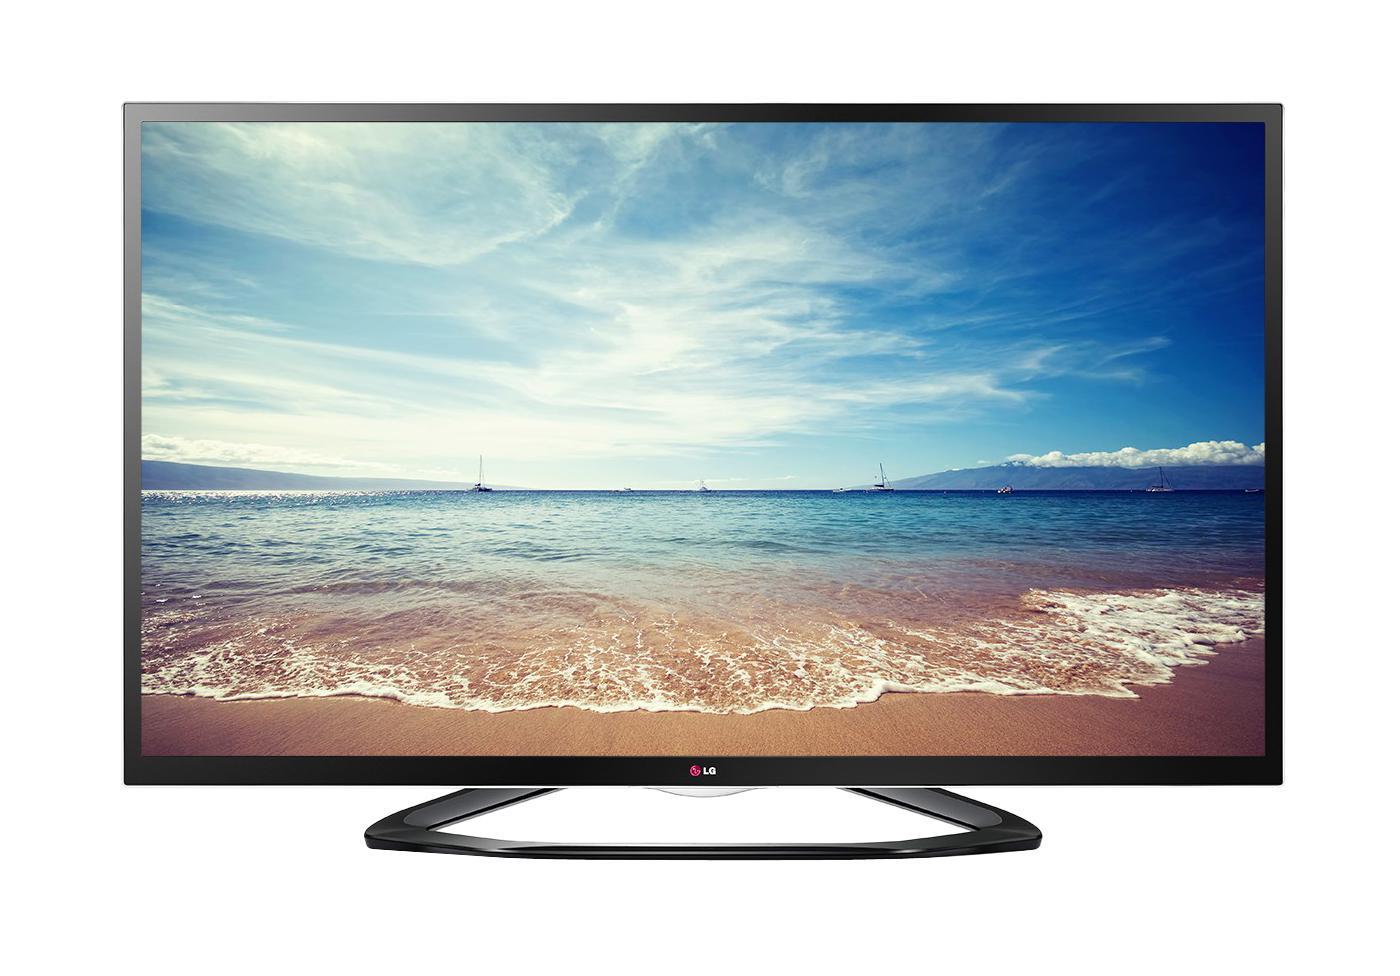 Авито купить телевизор lg. LG 32la643v-ZB. Телевизор LG 32la643v. Телевизор LG 42la643v. Телевизор LG 32la643v характеристики.